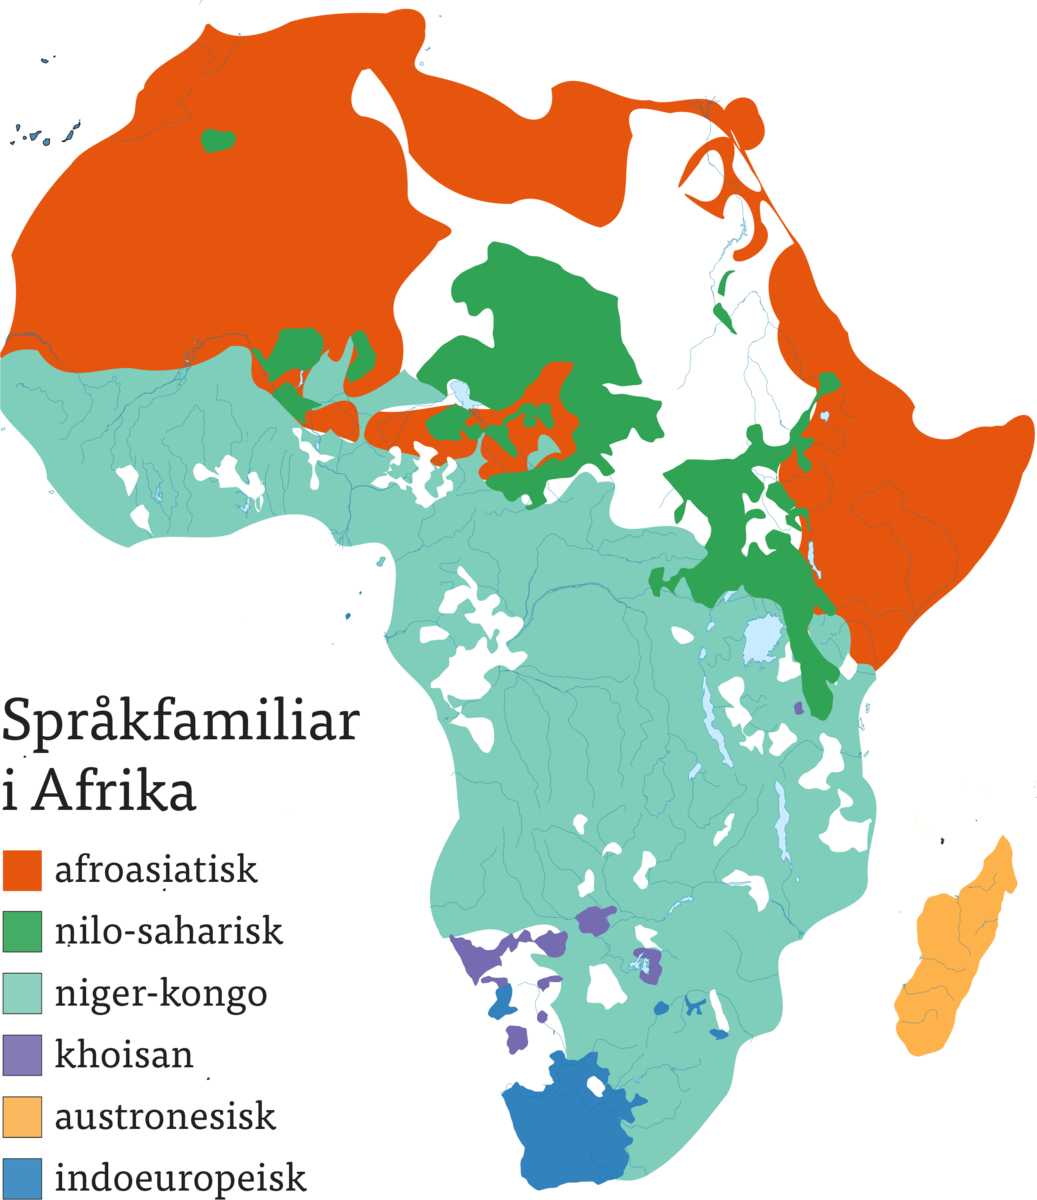 Joseph Greenbergs afrikanske språkfamiliar / Stephen Huffman